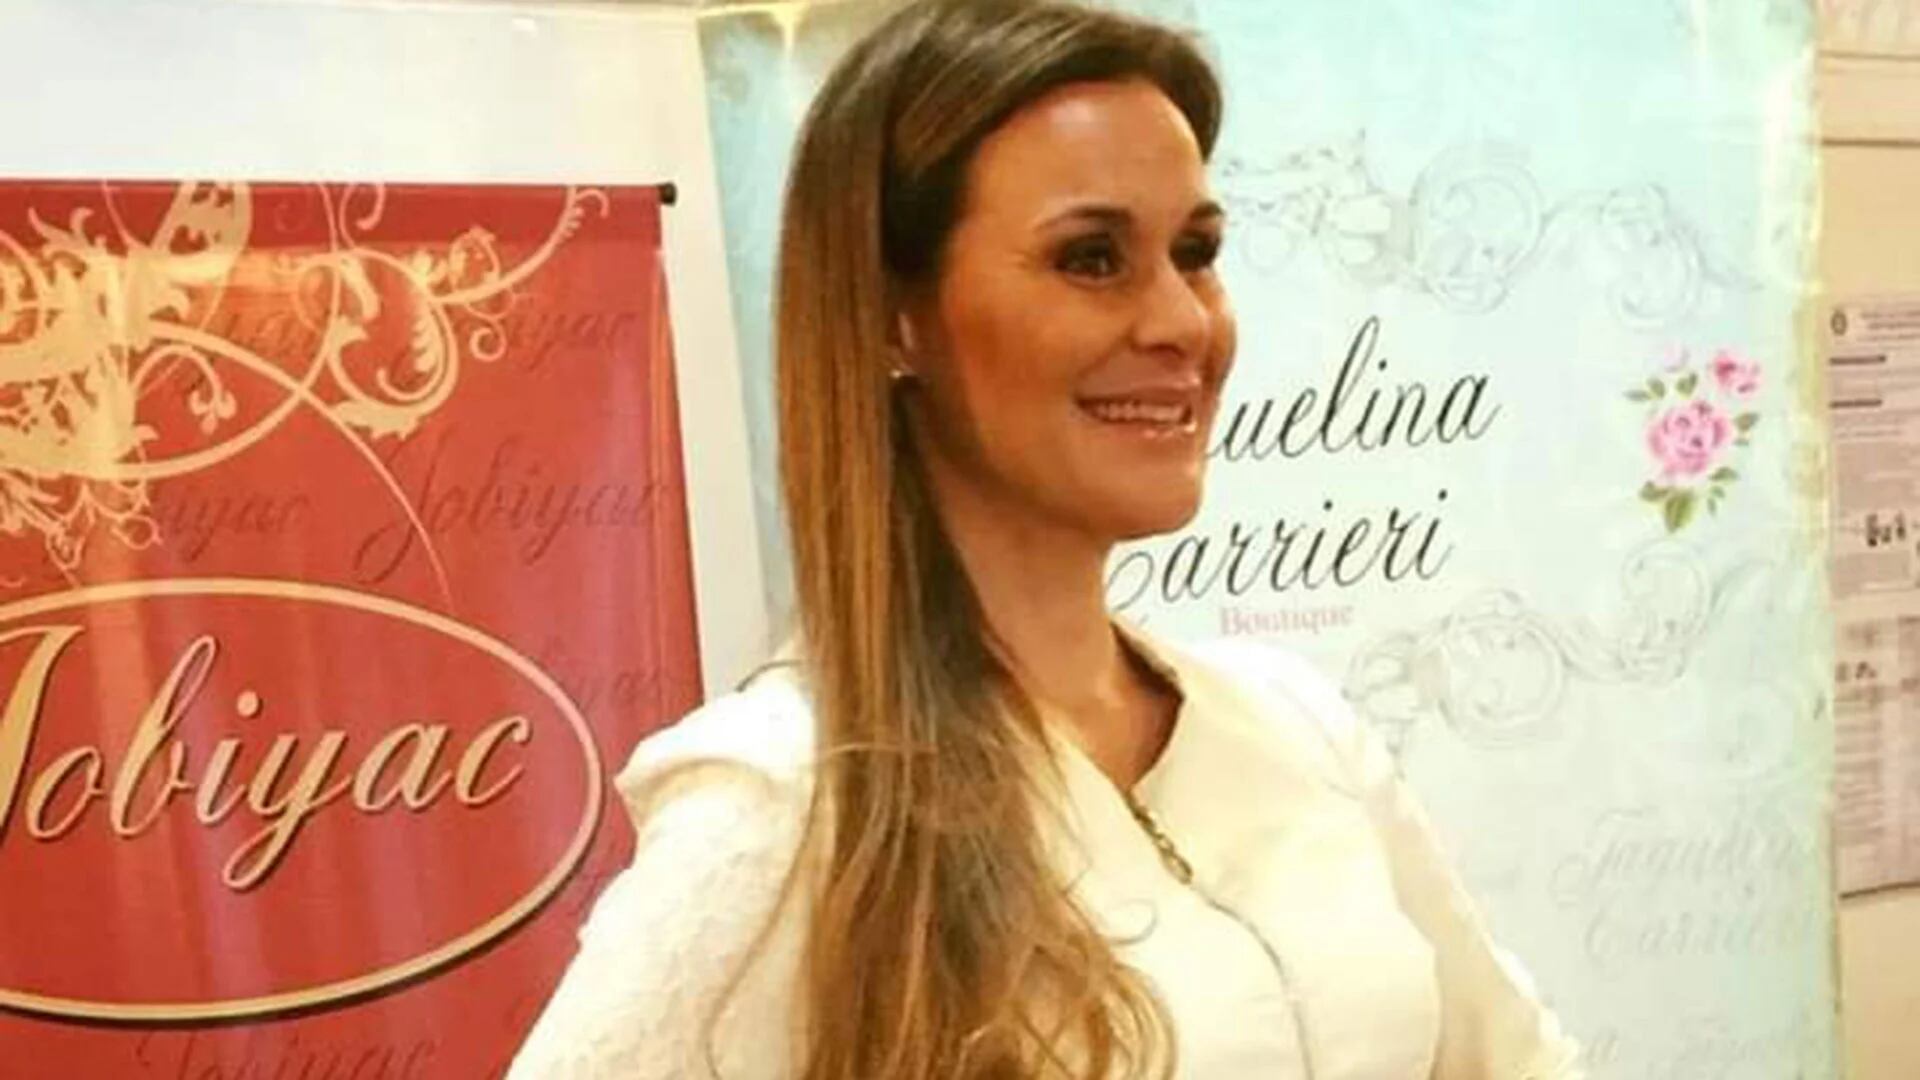 Falleció Jaquelin Carrieri, ex reina de la Vendimia de Mendoza, luego de someterse a una cirugía estética